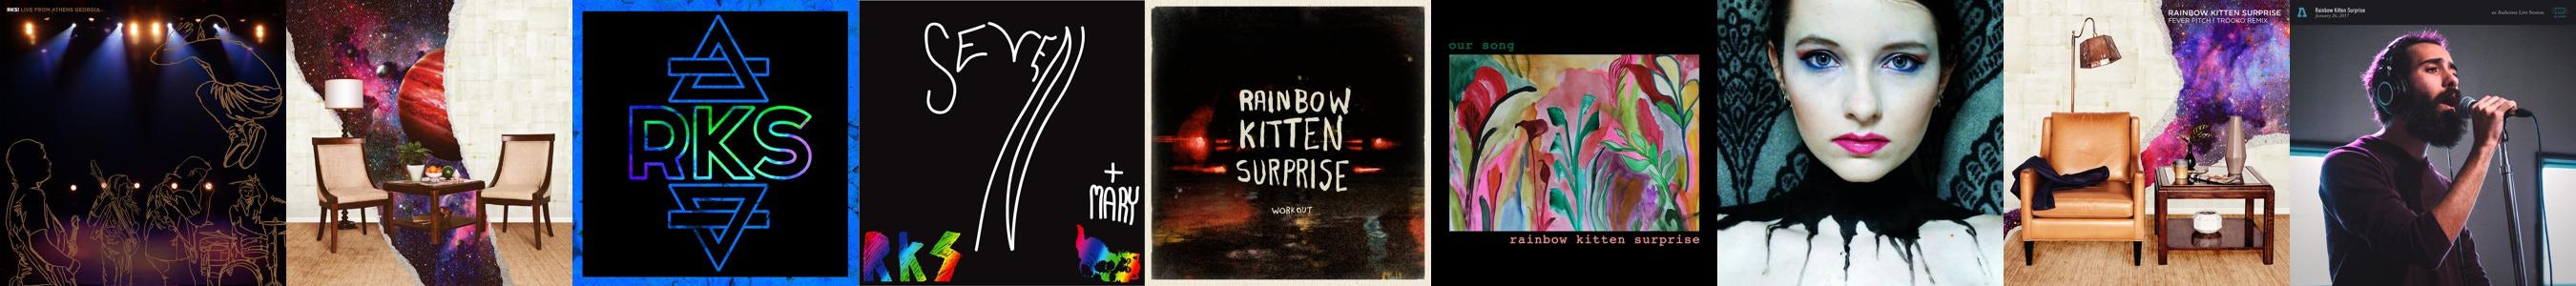 Rainbow Kitten Surprise Collectors Set of 6 Guitar Picks with Tin